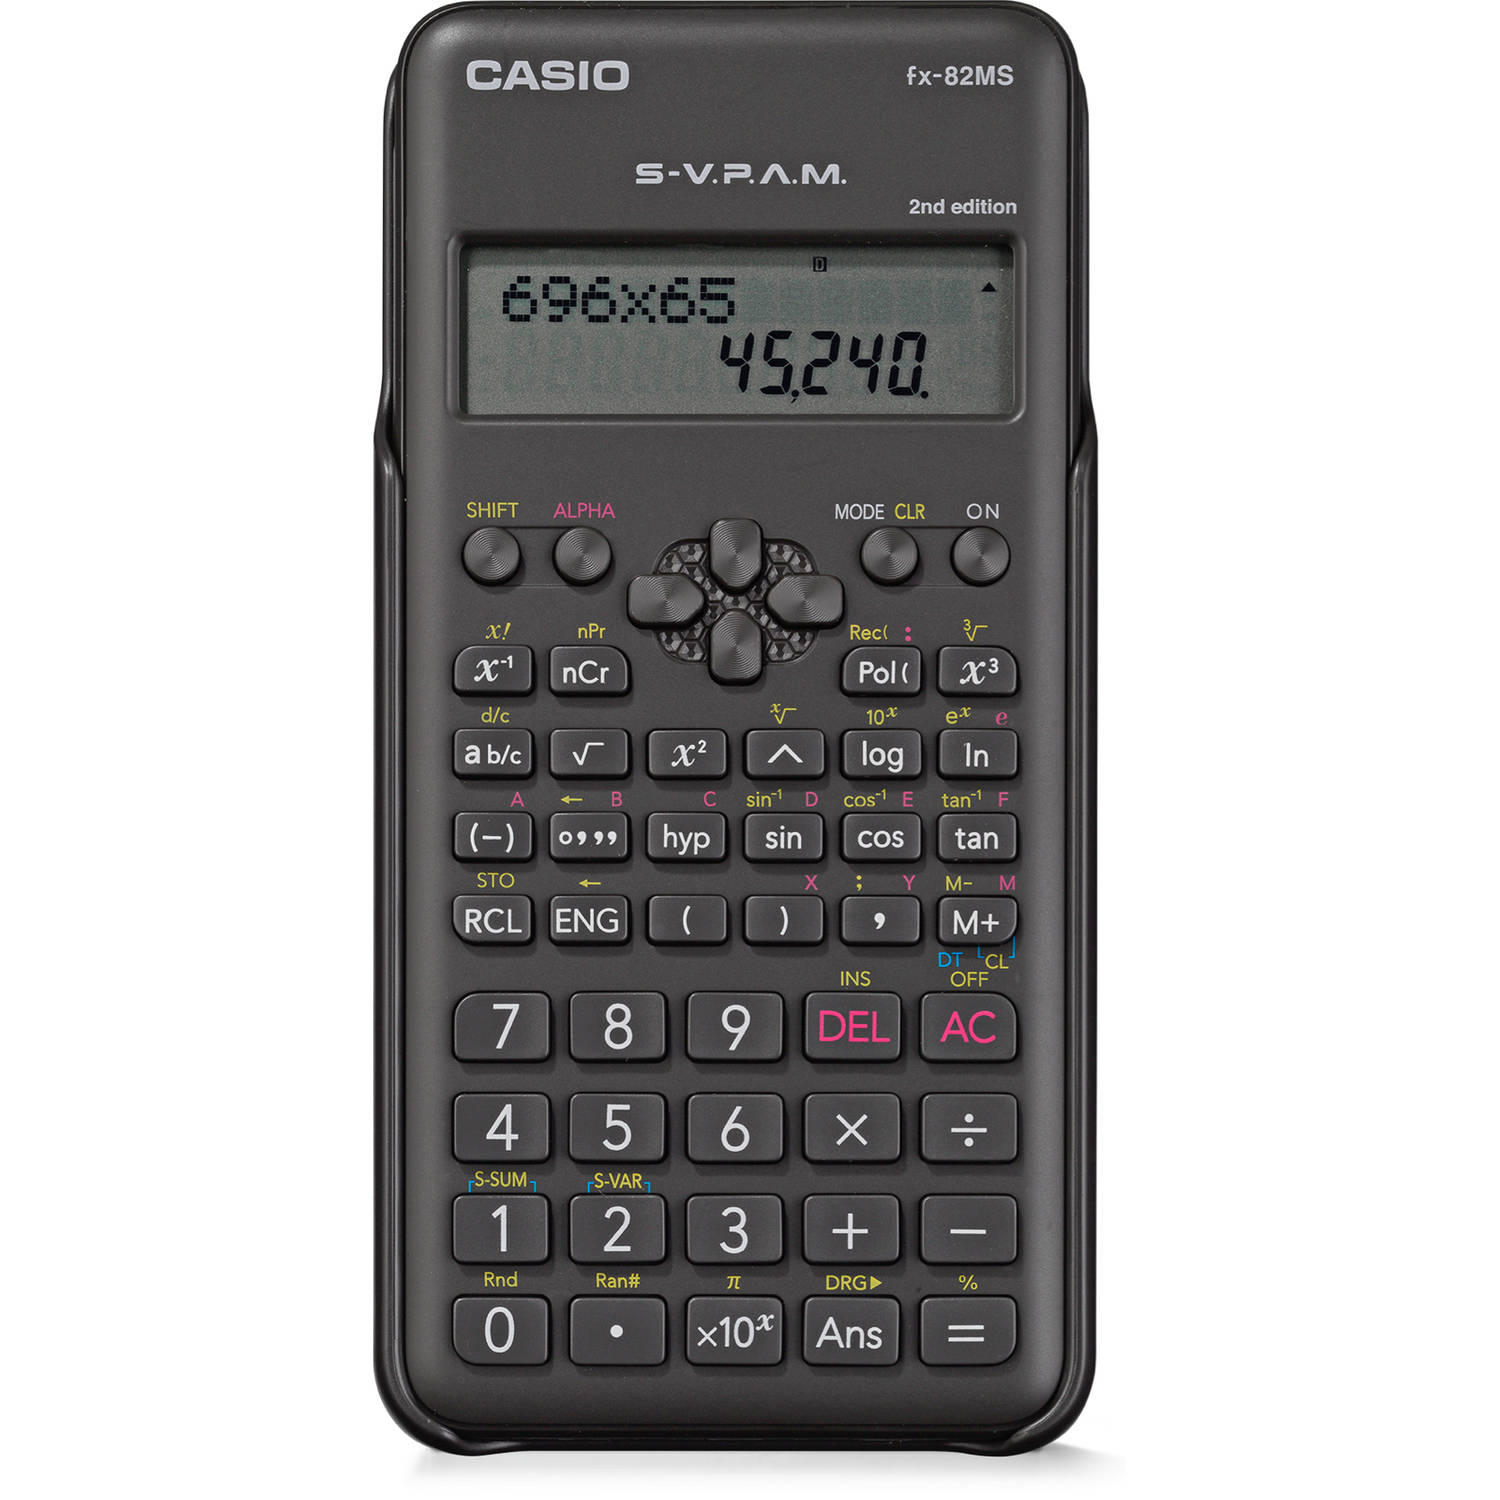 Portret verder factor Casio rekenmachine fx-82MS | Blokker